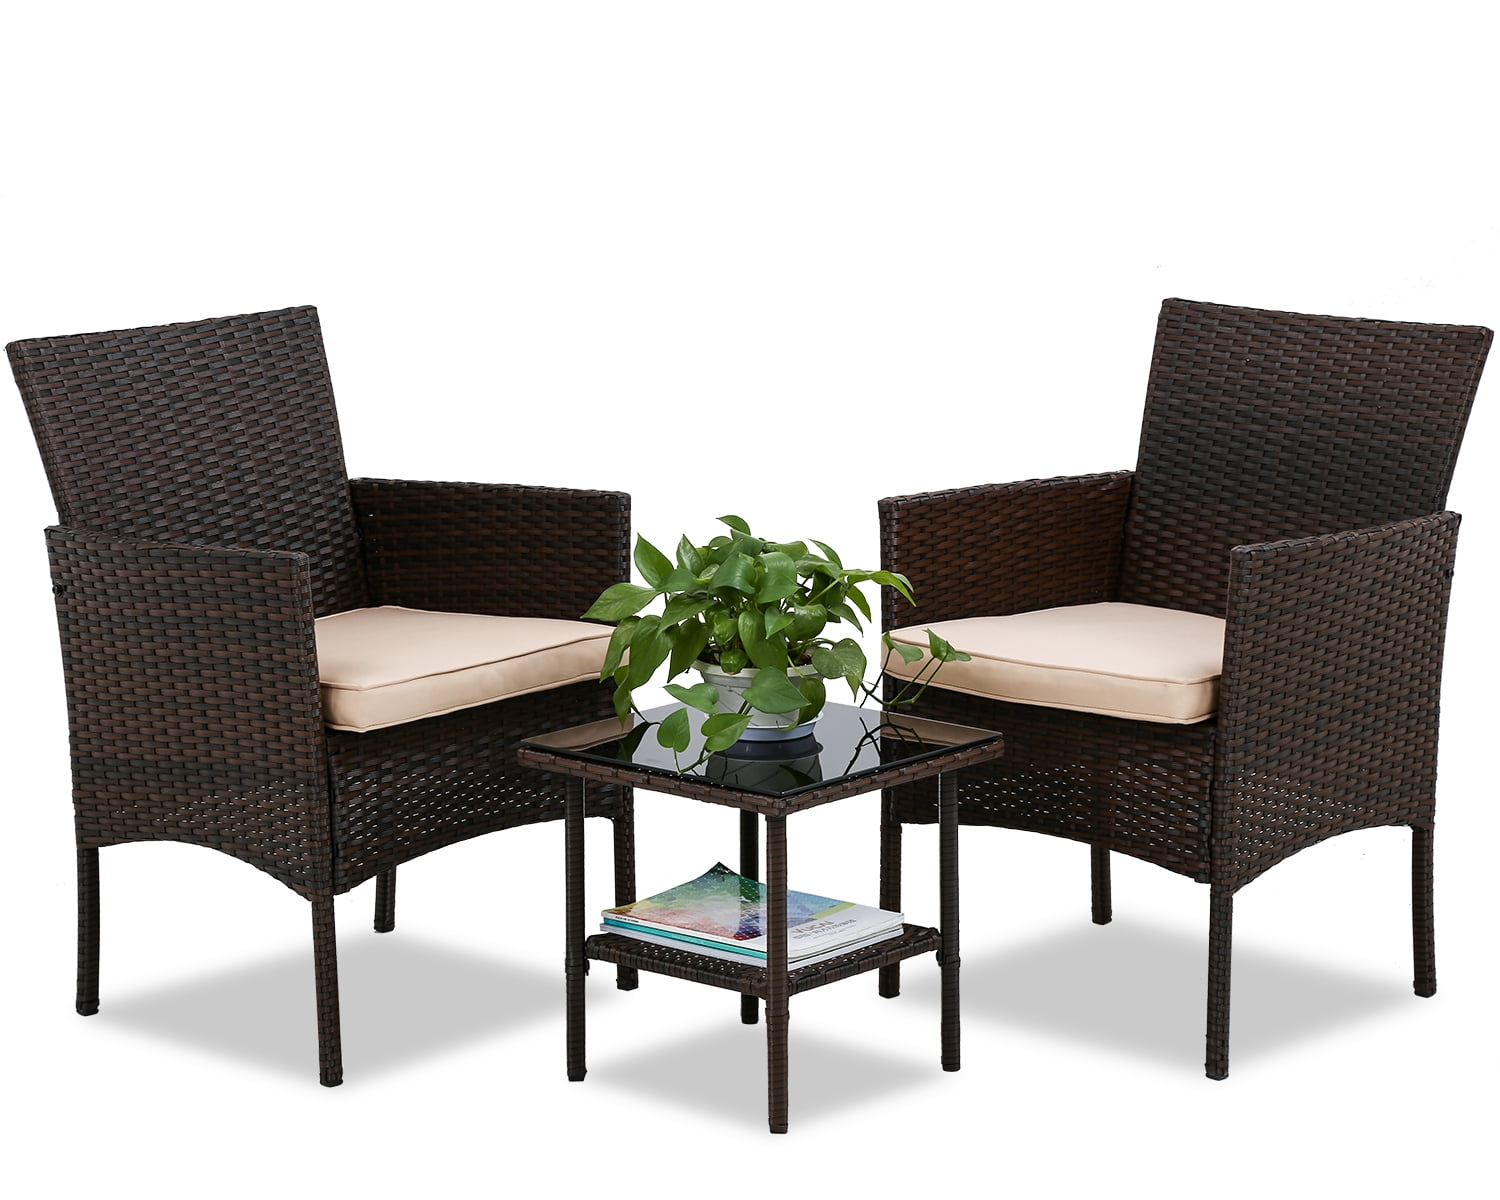 Topbuy Outdoor Rattan Furniture Wicker Conversation Chair 